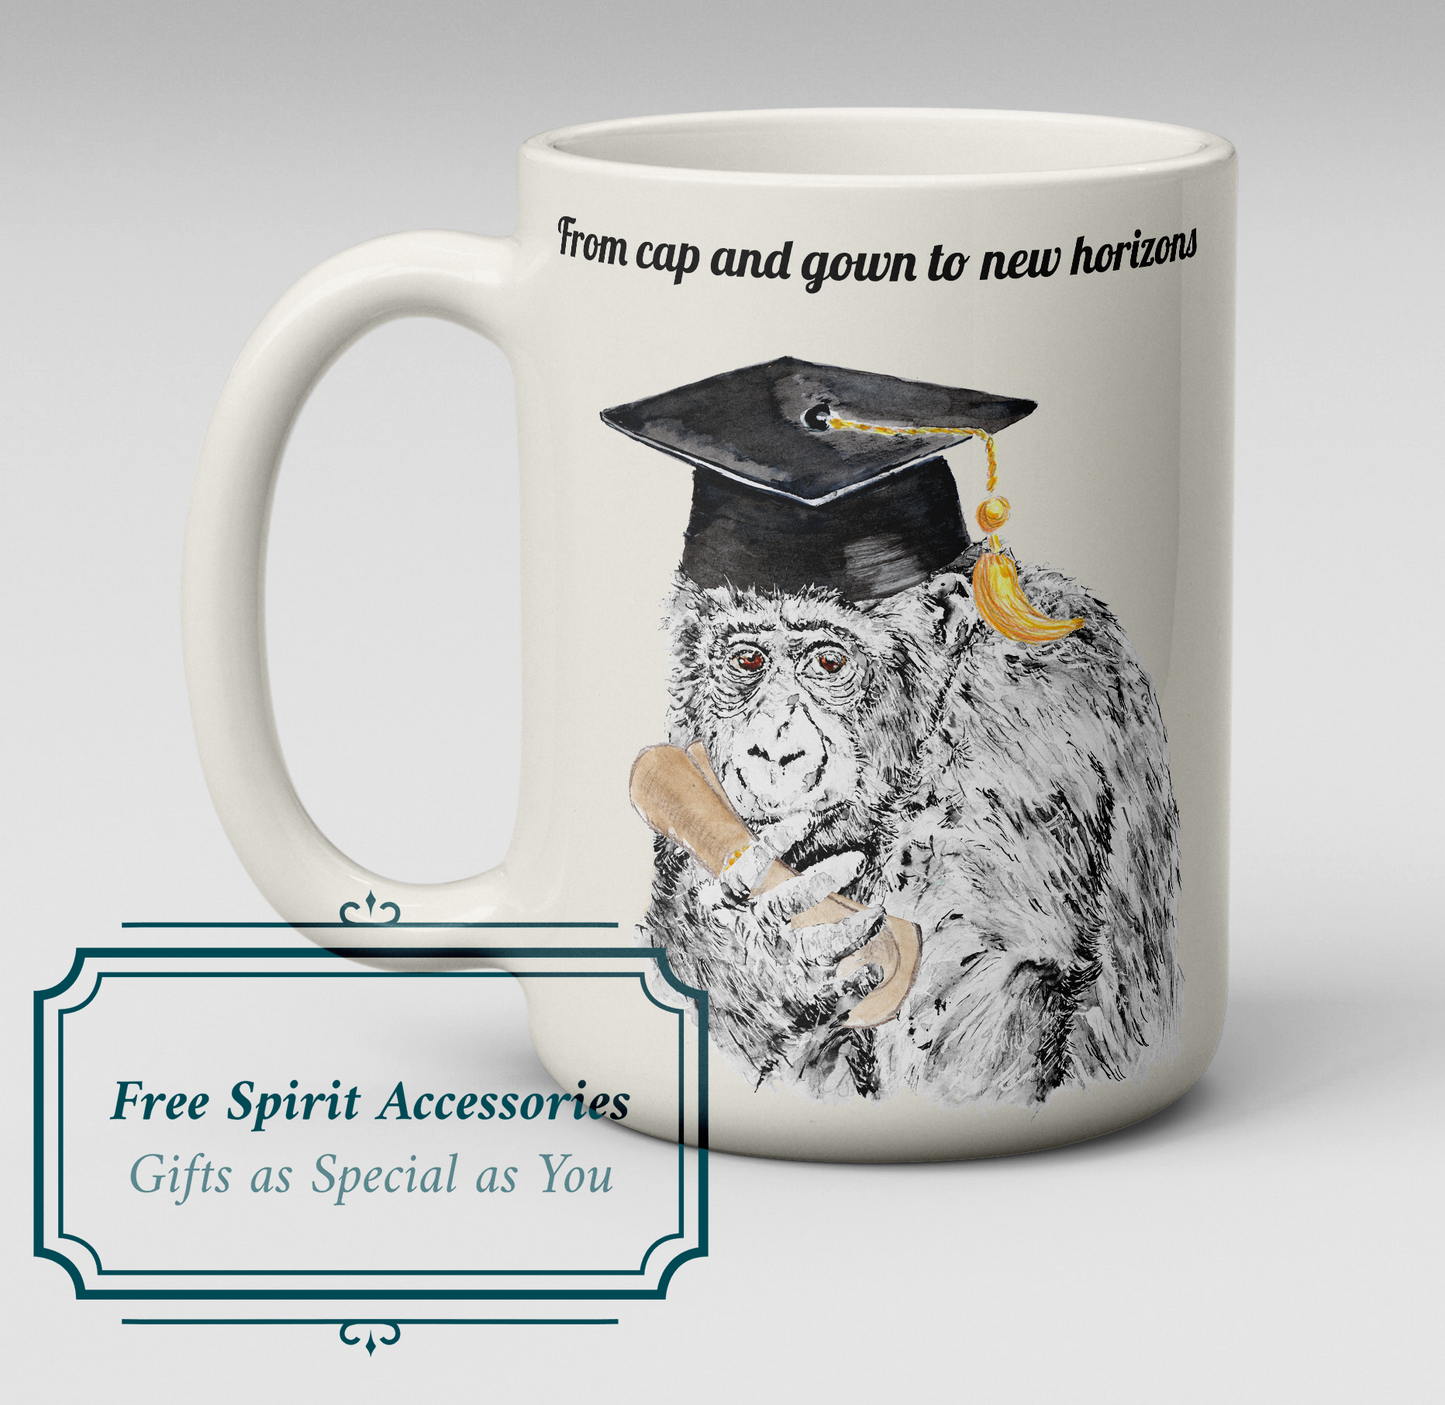  Funny Capped Gorilla Graduation Mug by Free Spirit Accessories sold by Free Spirit Accessories